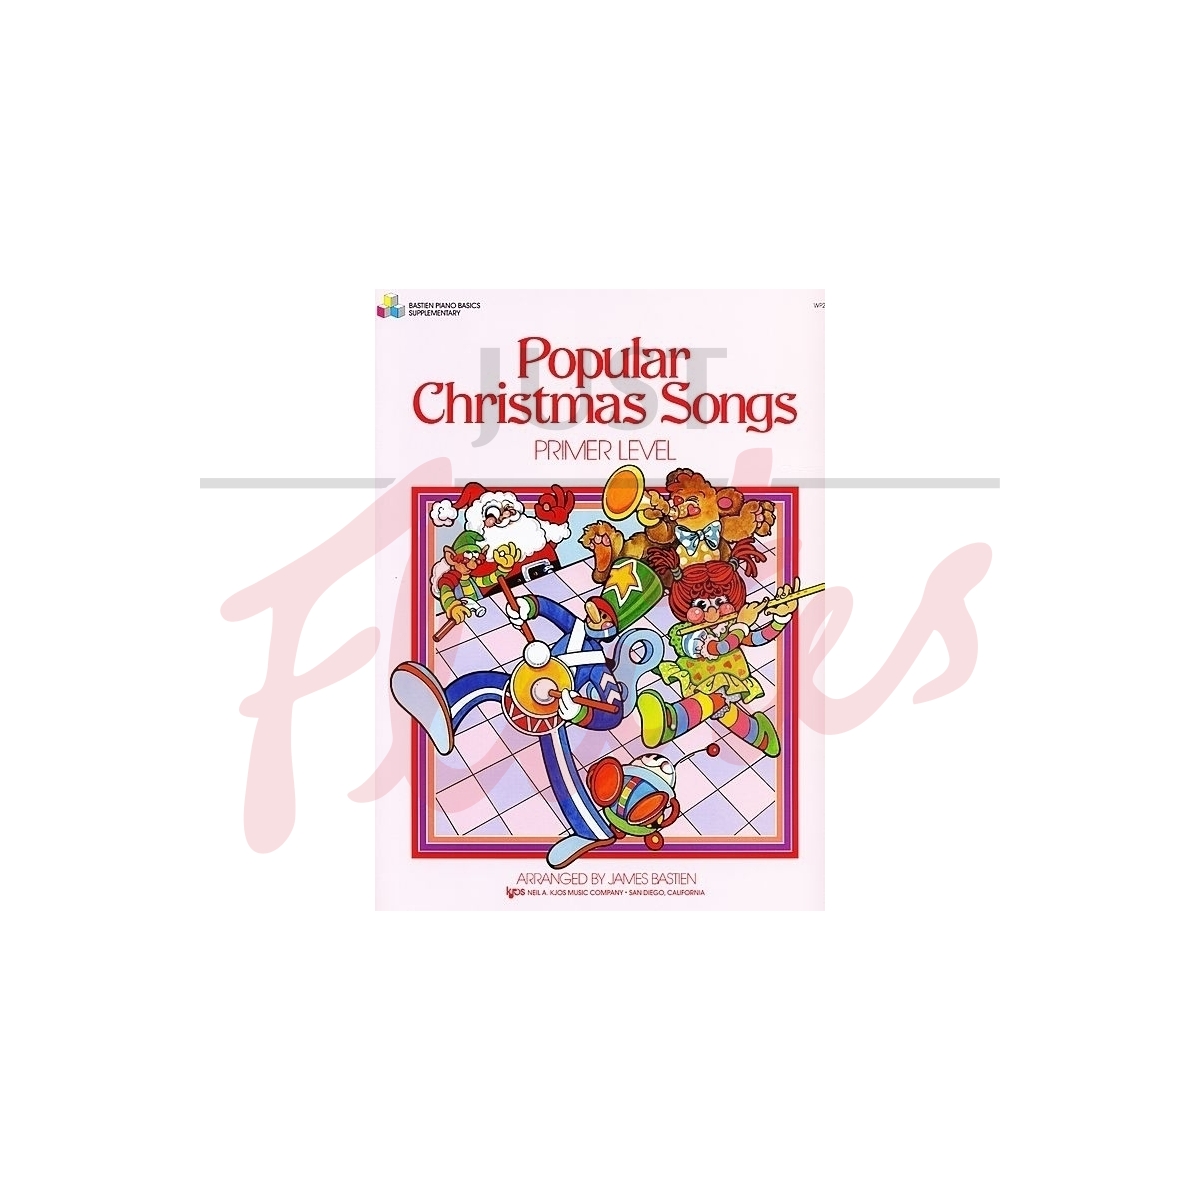 Popular Christmas Songs Primer Level for Piano